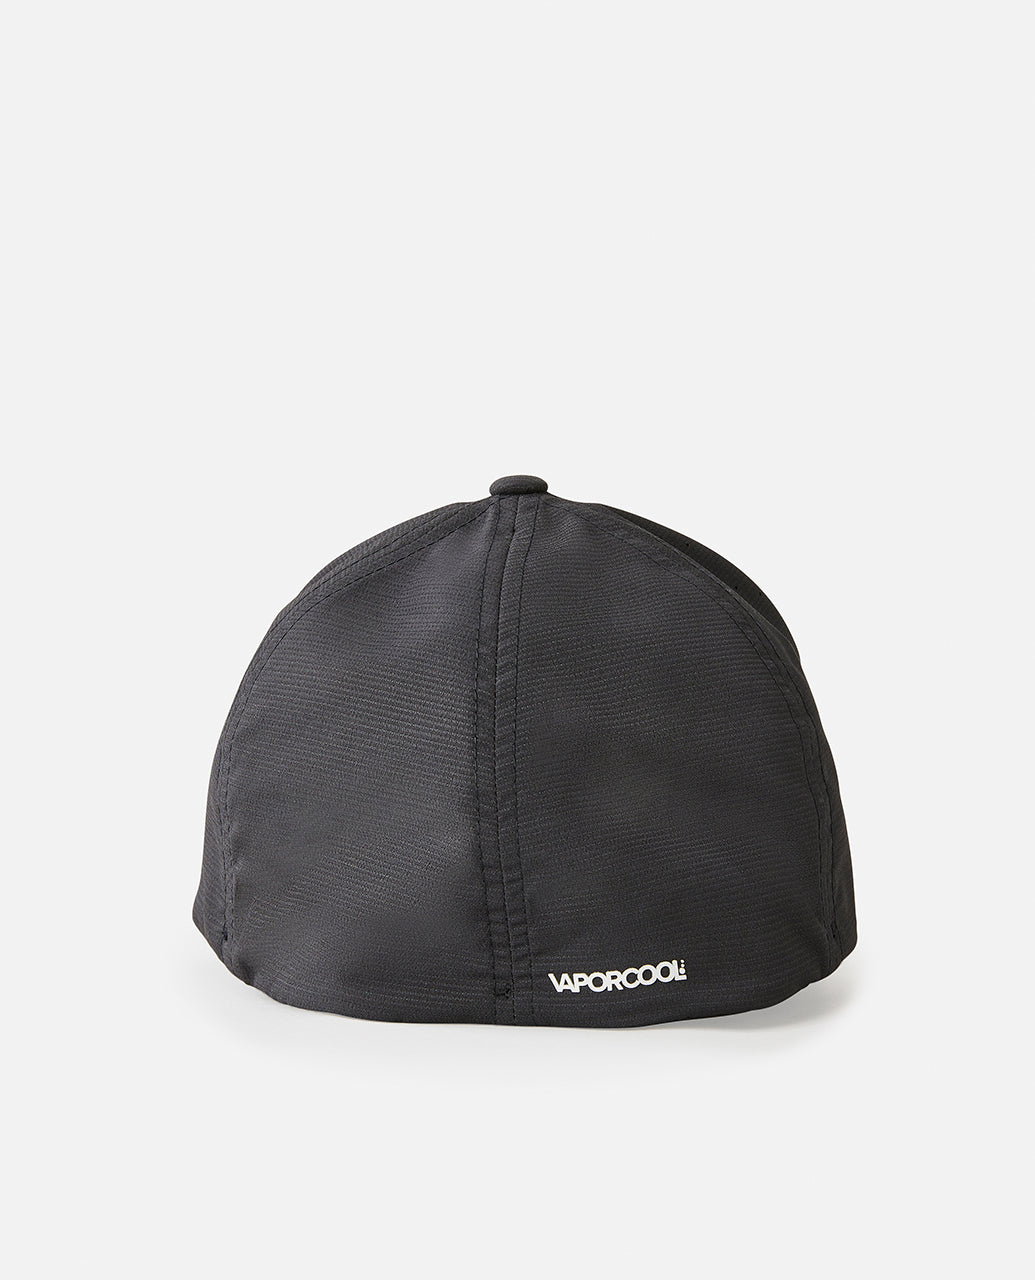 VAPORCOOL PHASER FLEXFIT CAP